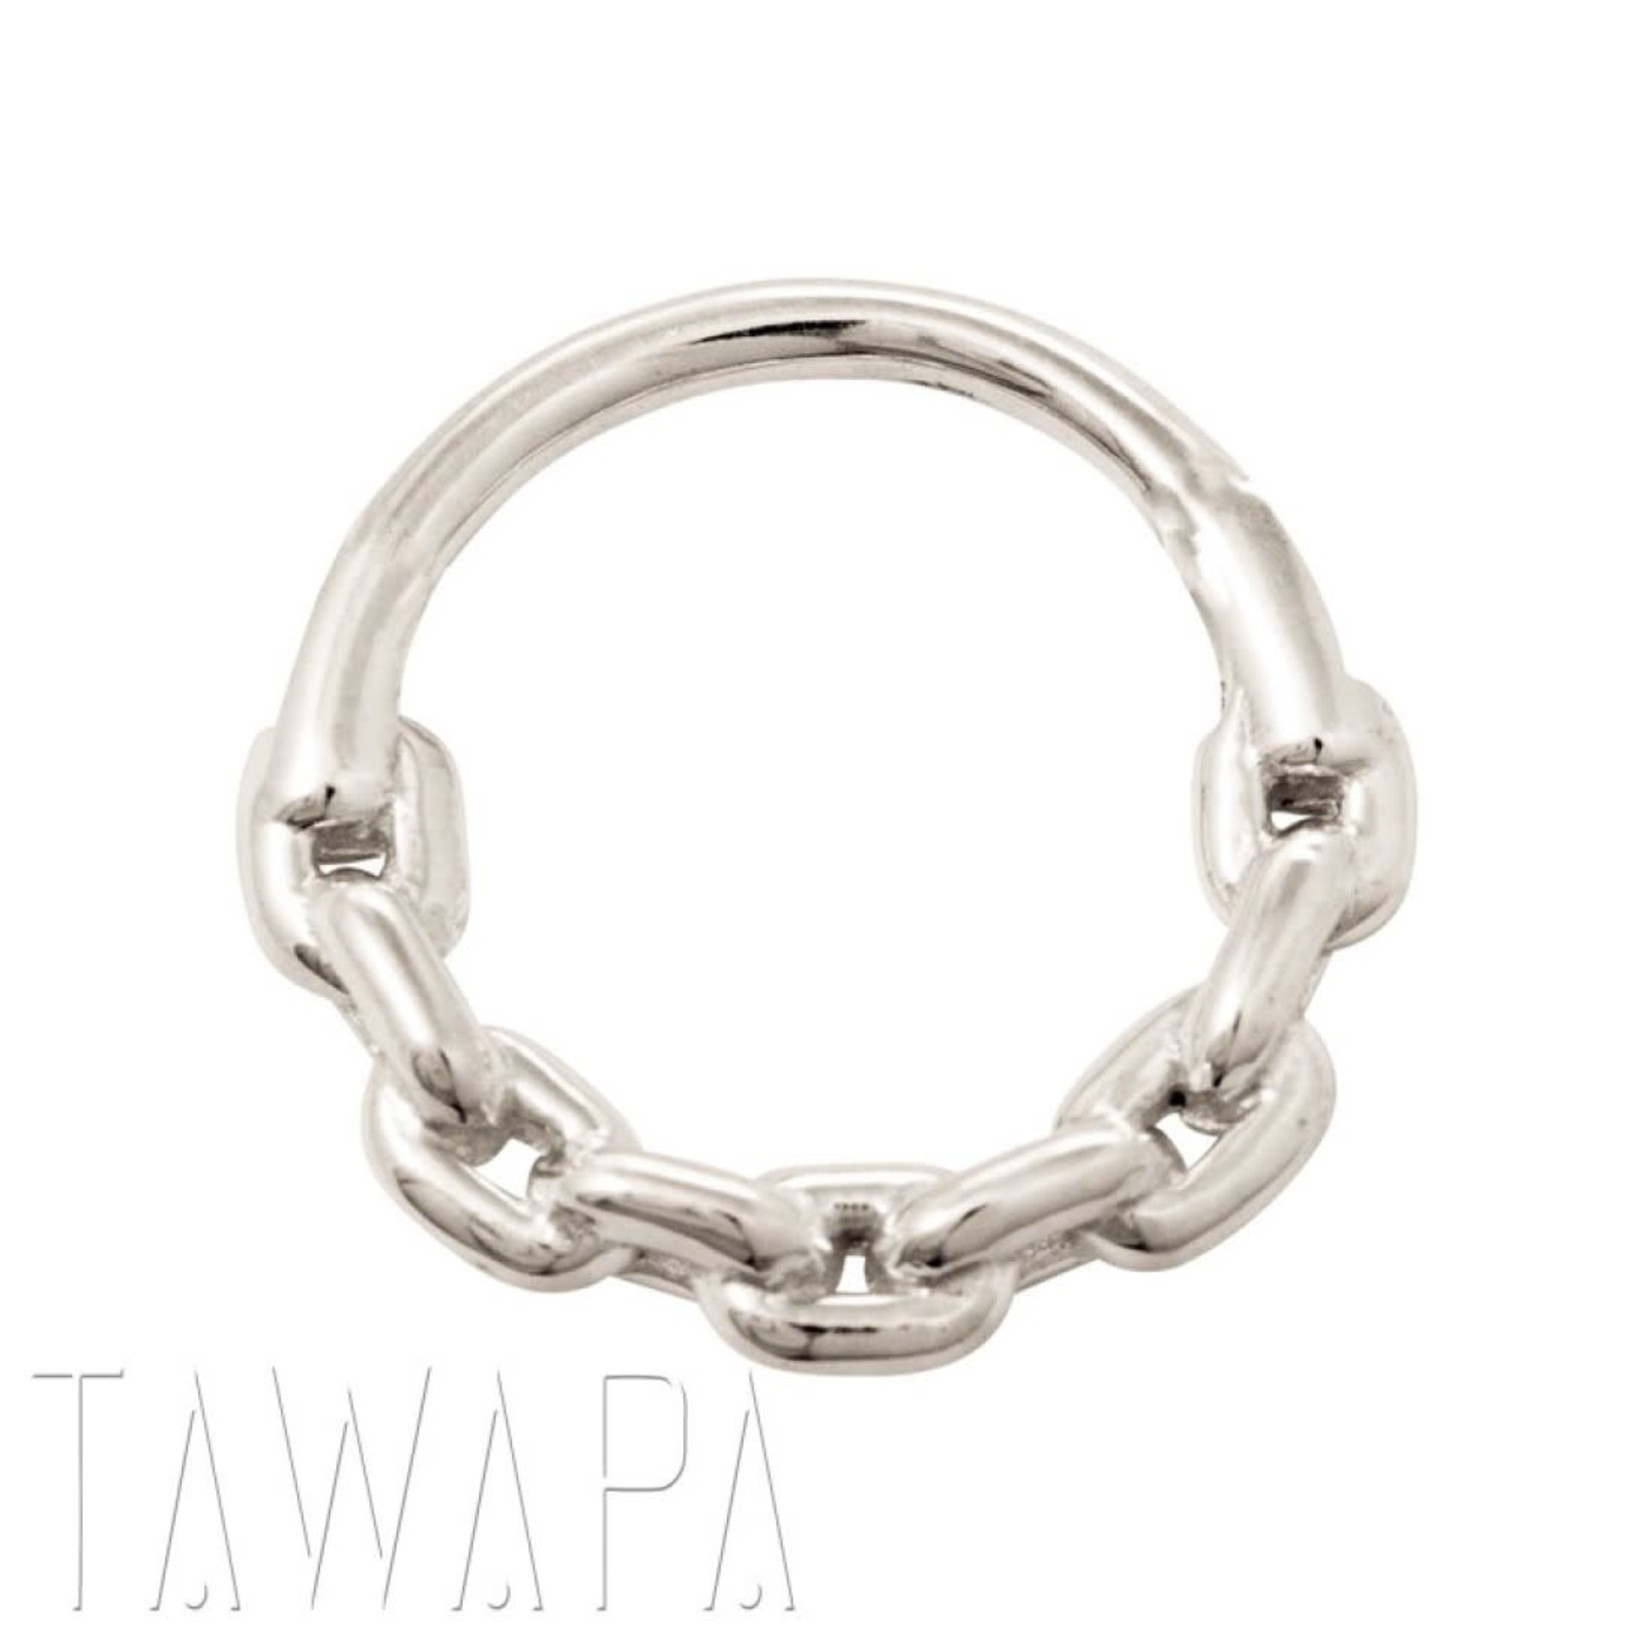 Tawapa Tawapa 18g "Chain Link" seam ring